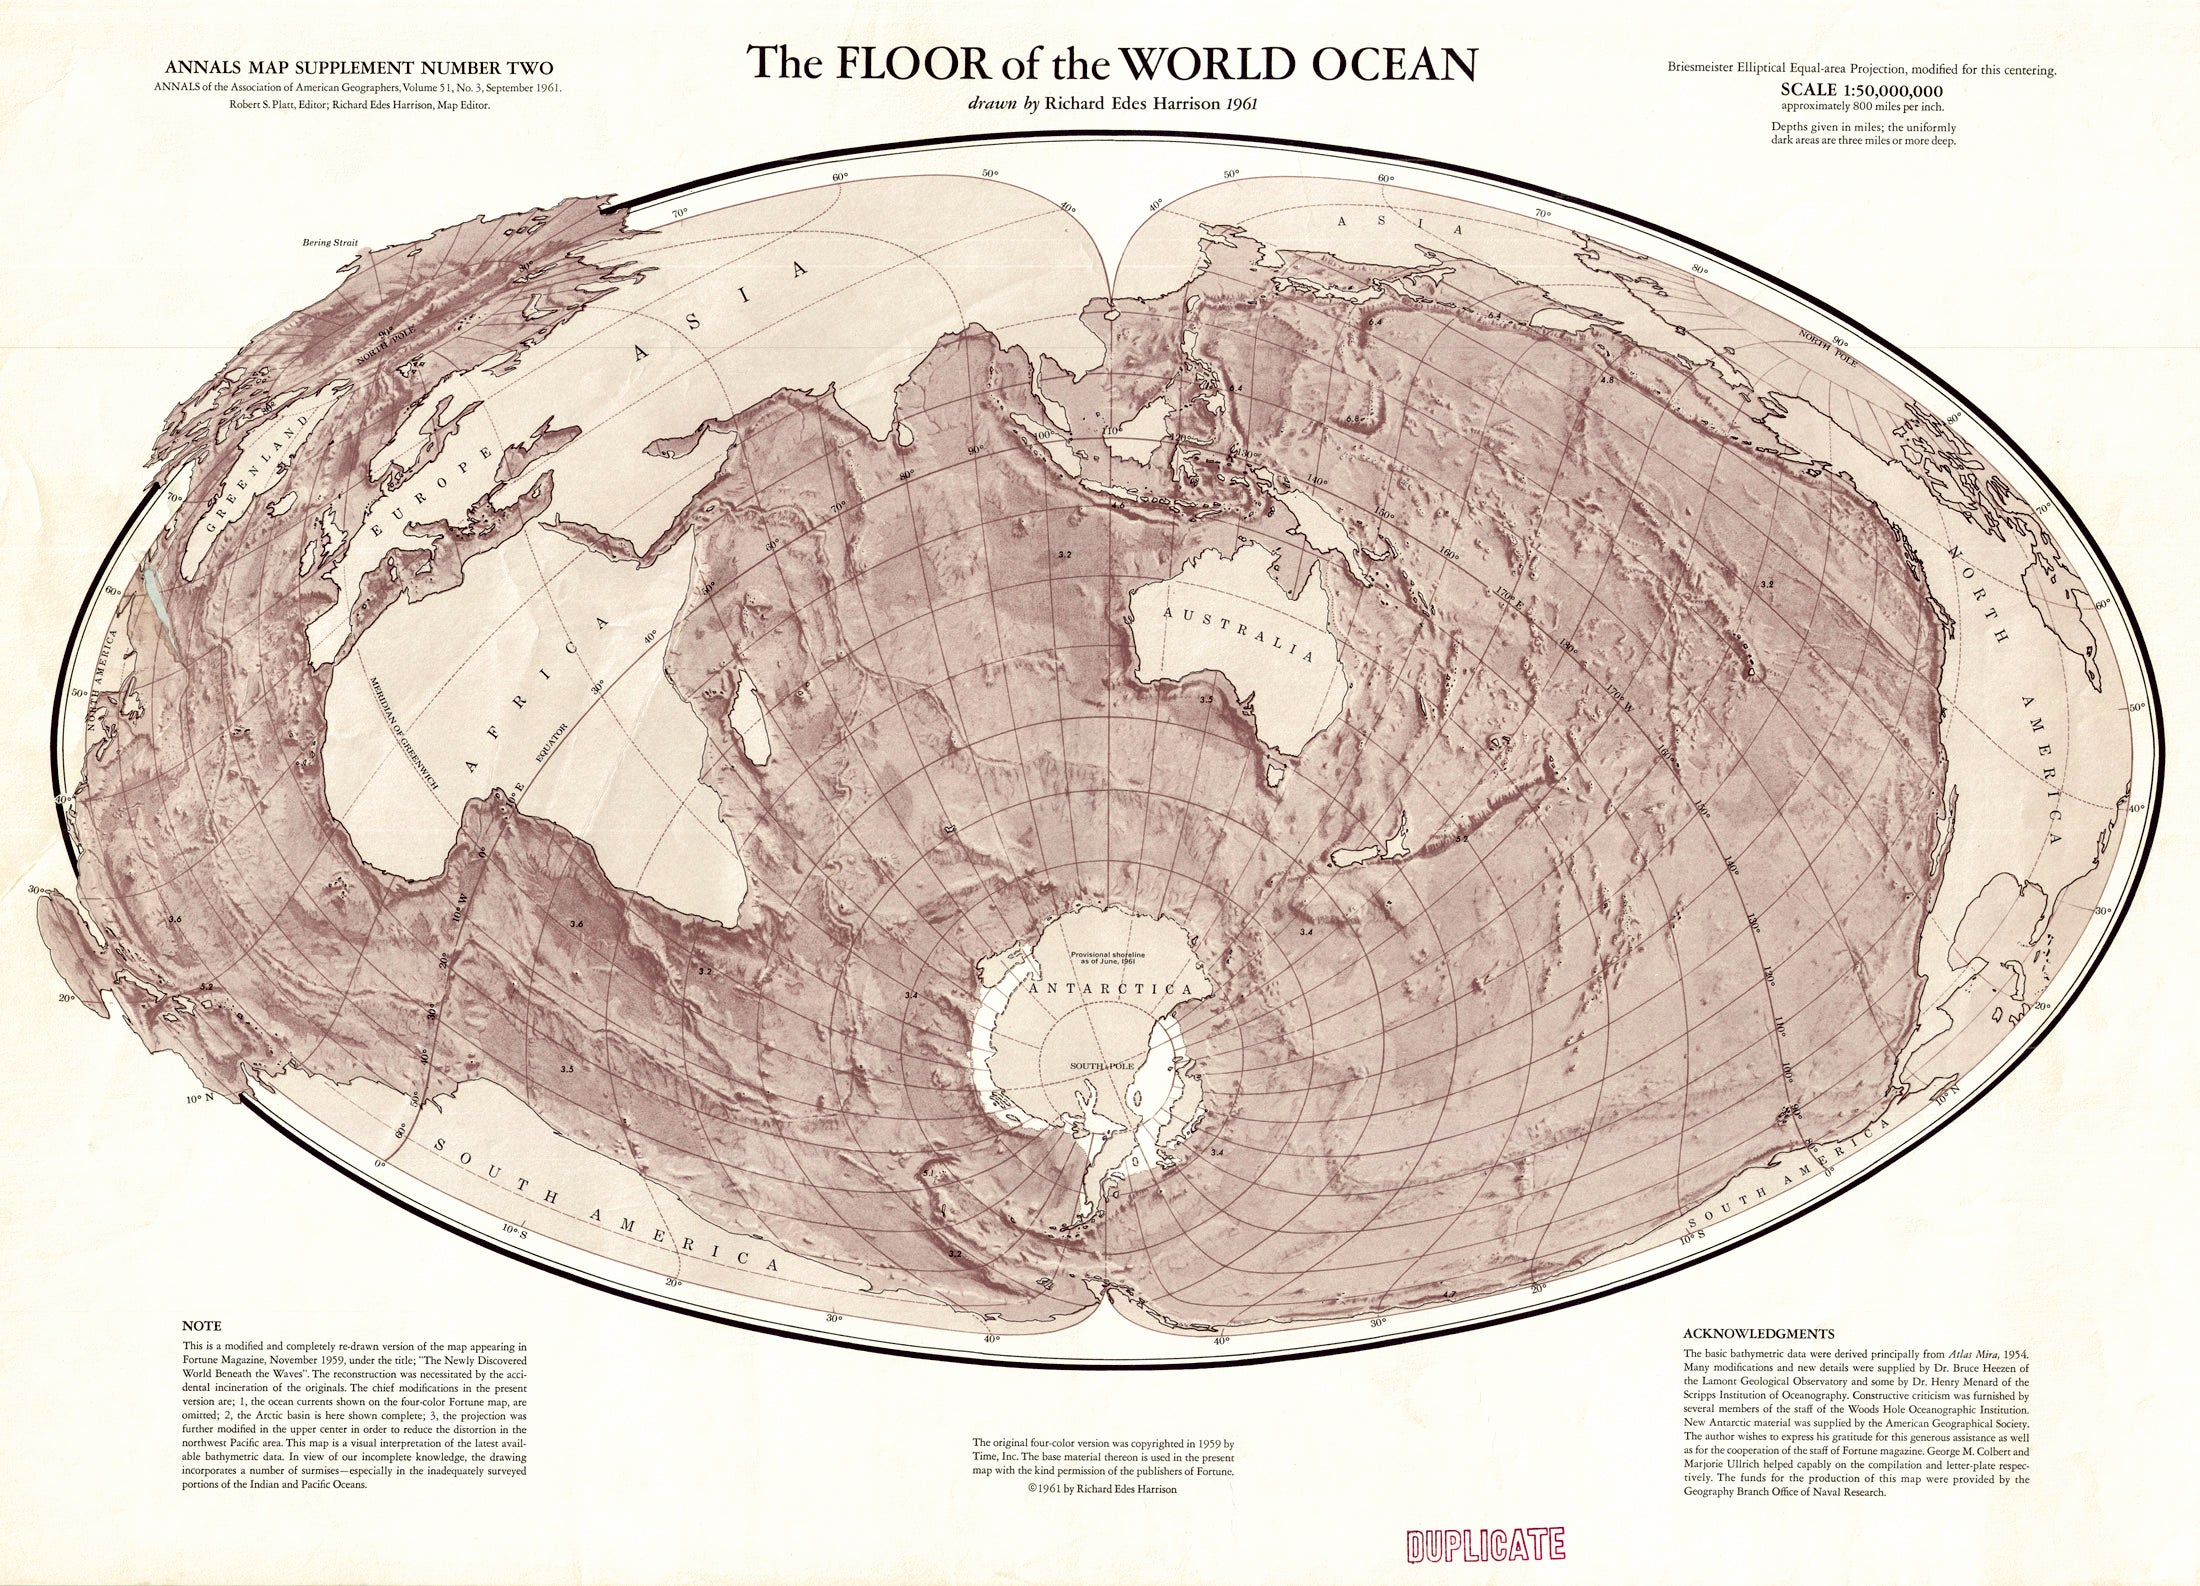 (World -Oceans) The Floor of the World Ocean